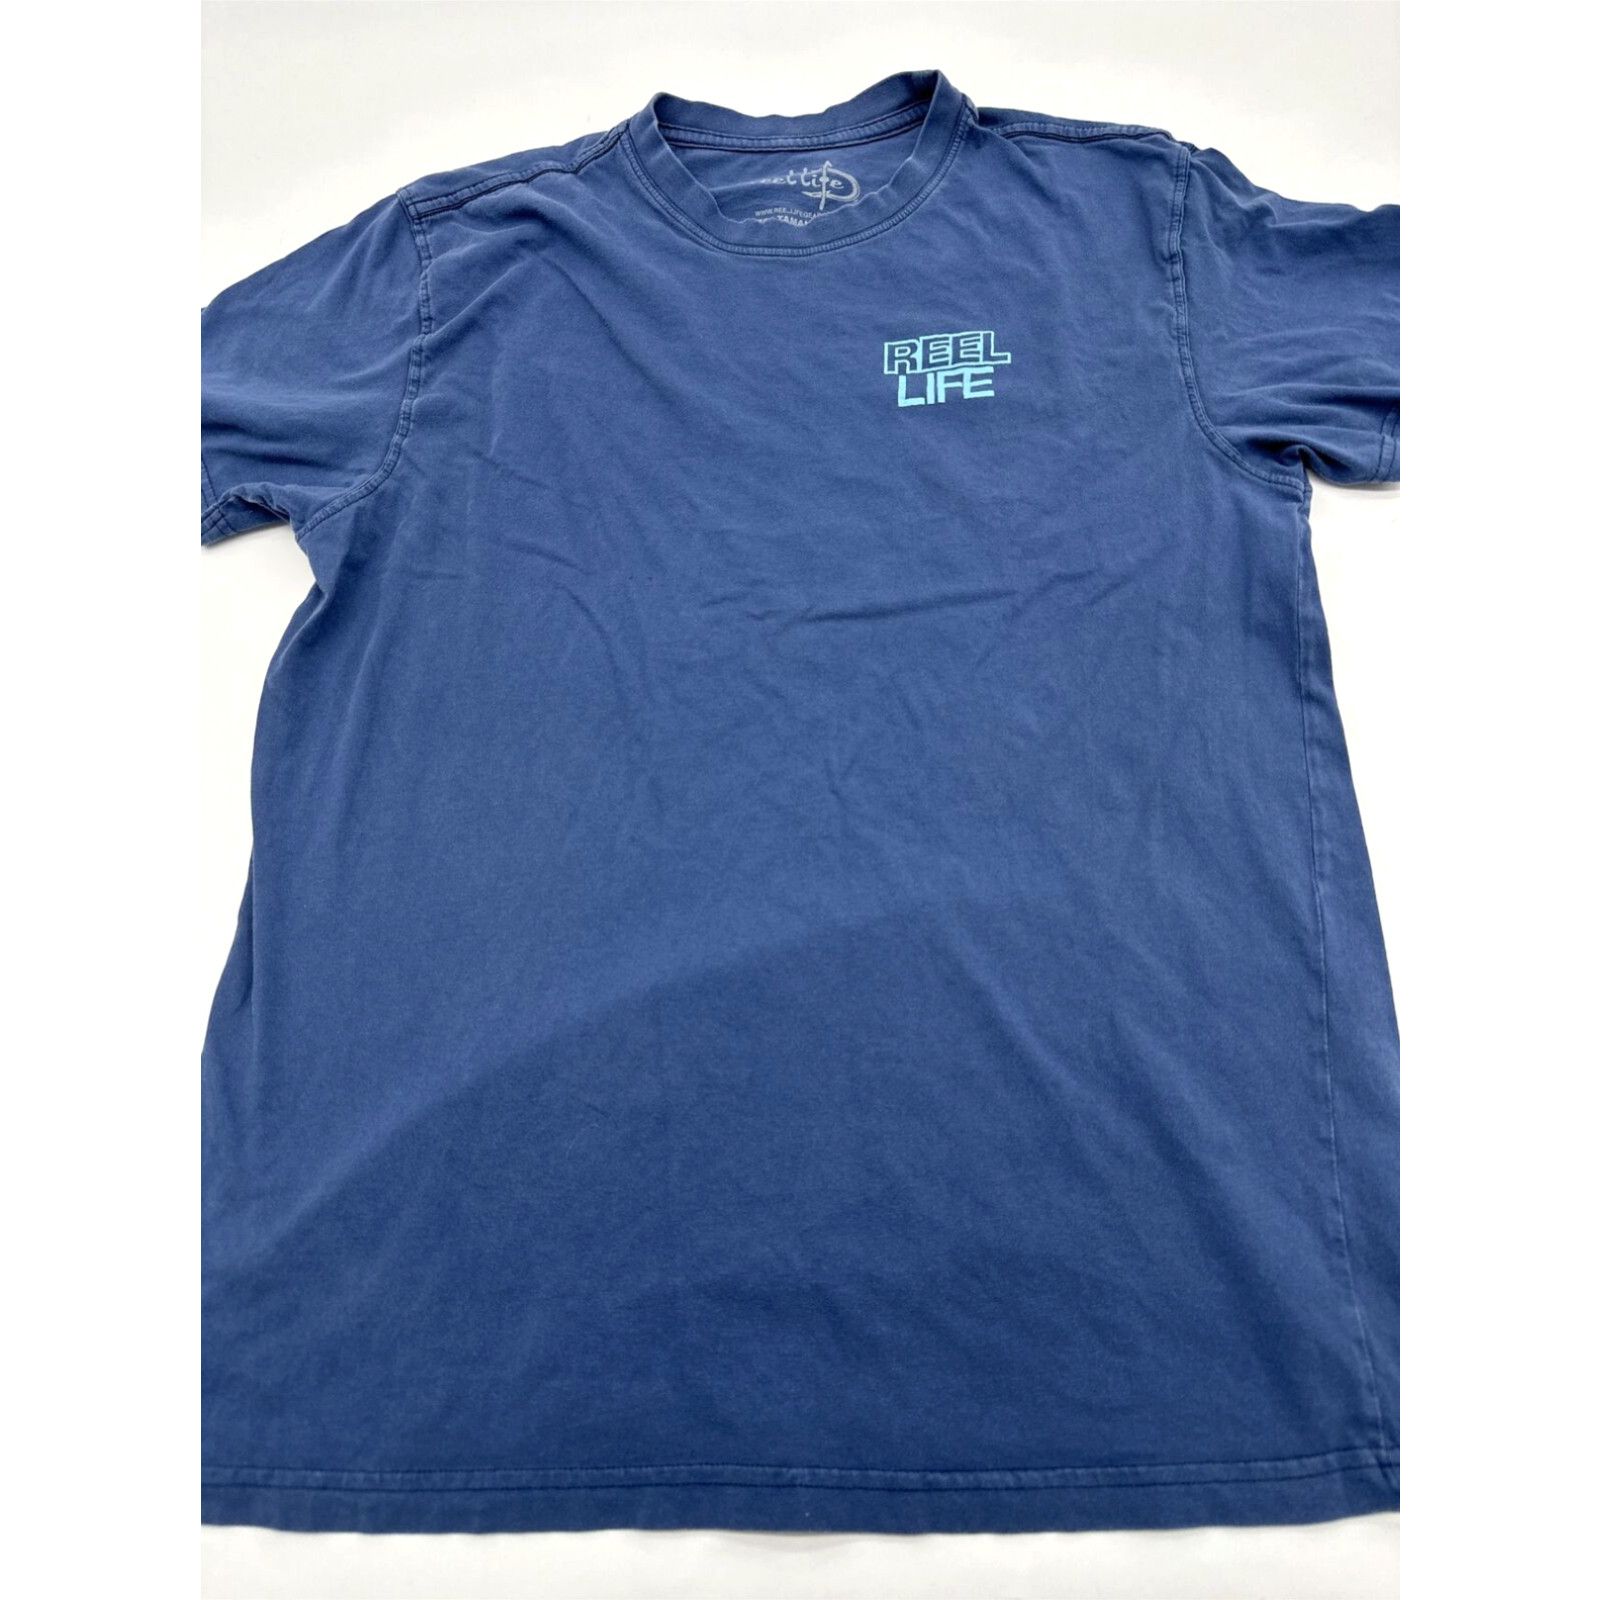 Alife Reel Life T-Shirt Men Large Graphic Print Logo Blue Ocean